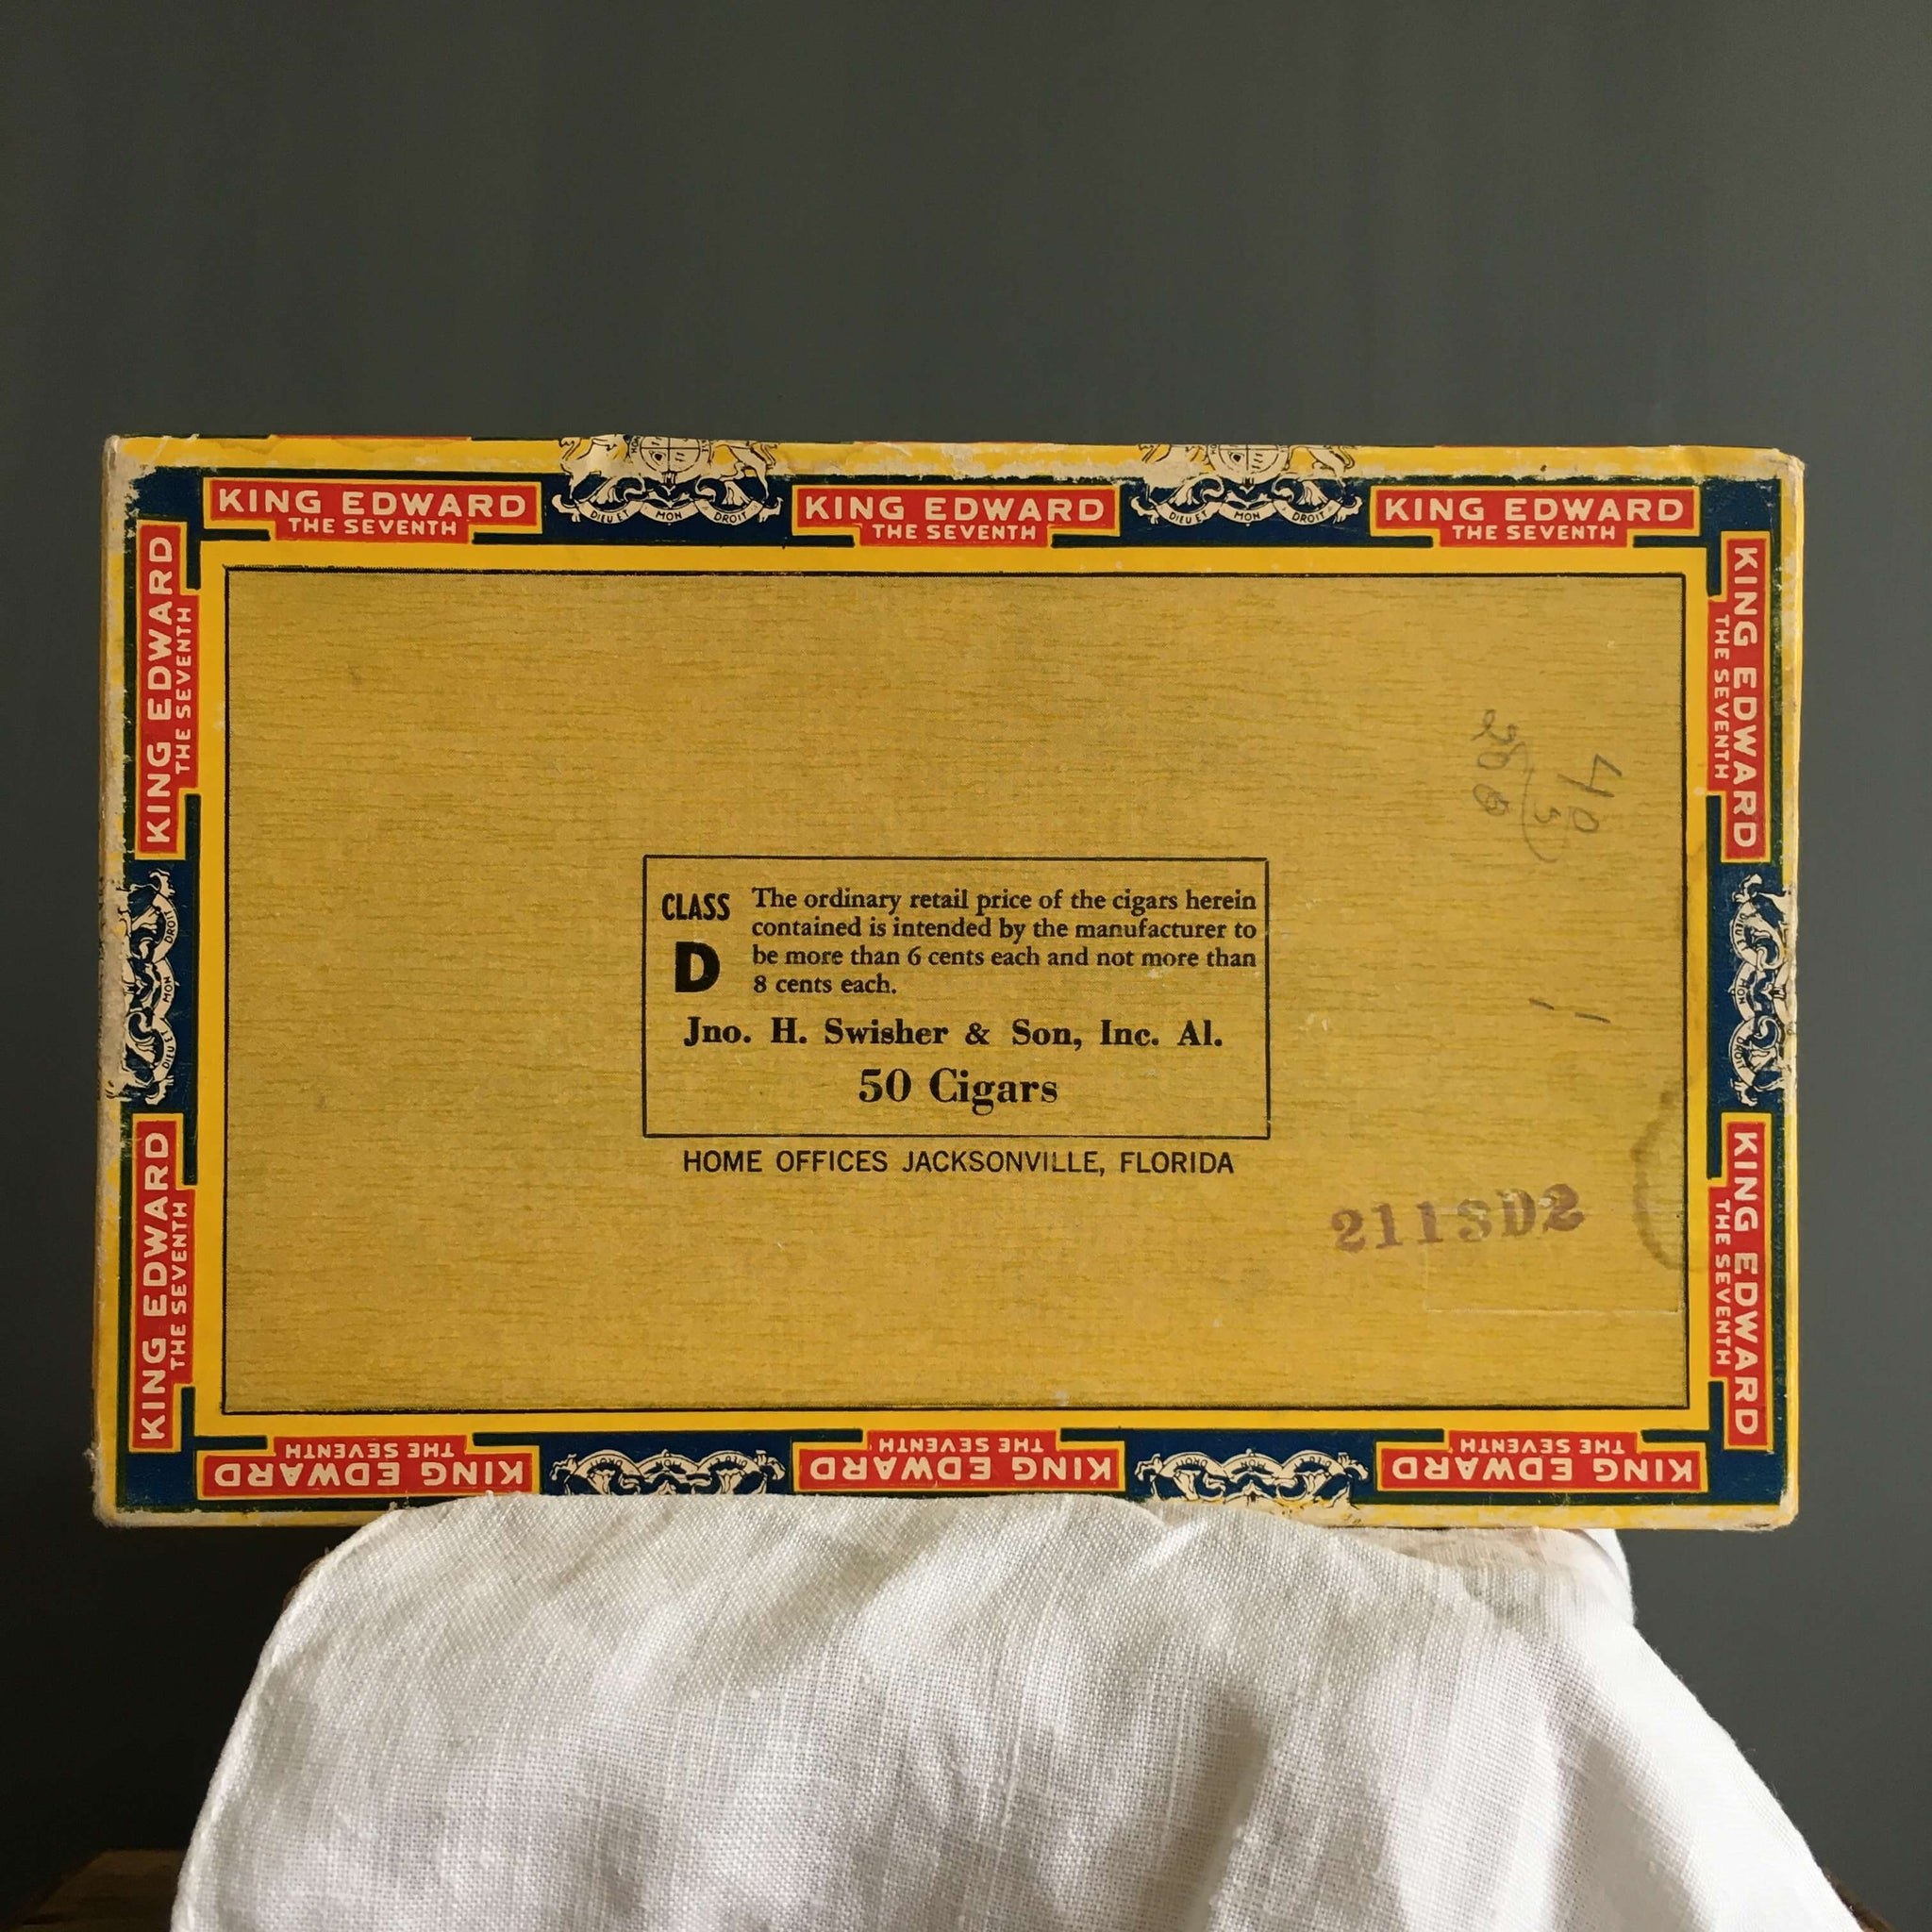 Vintage 1930s Cigar Box - King Edward the Seventh Imperial Cigars Cardboard Box